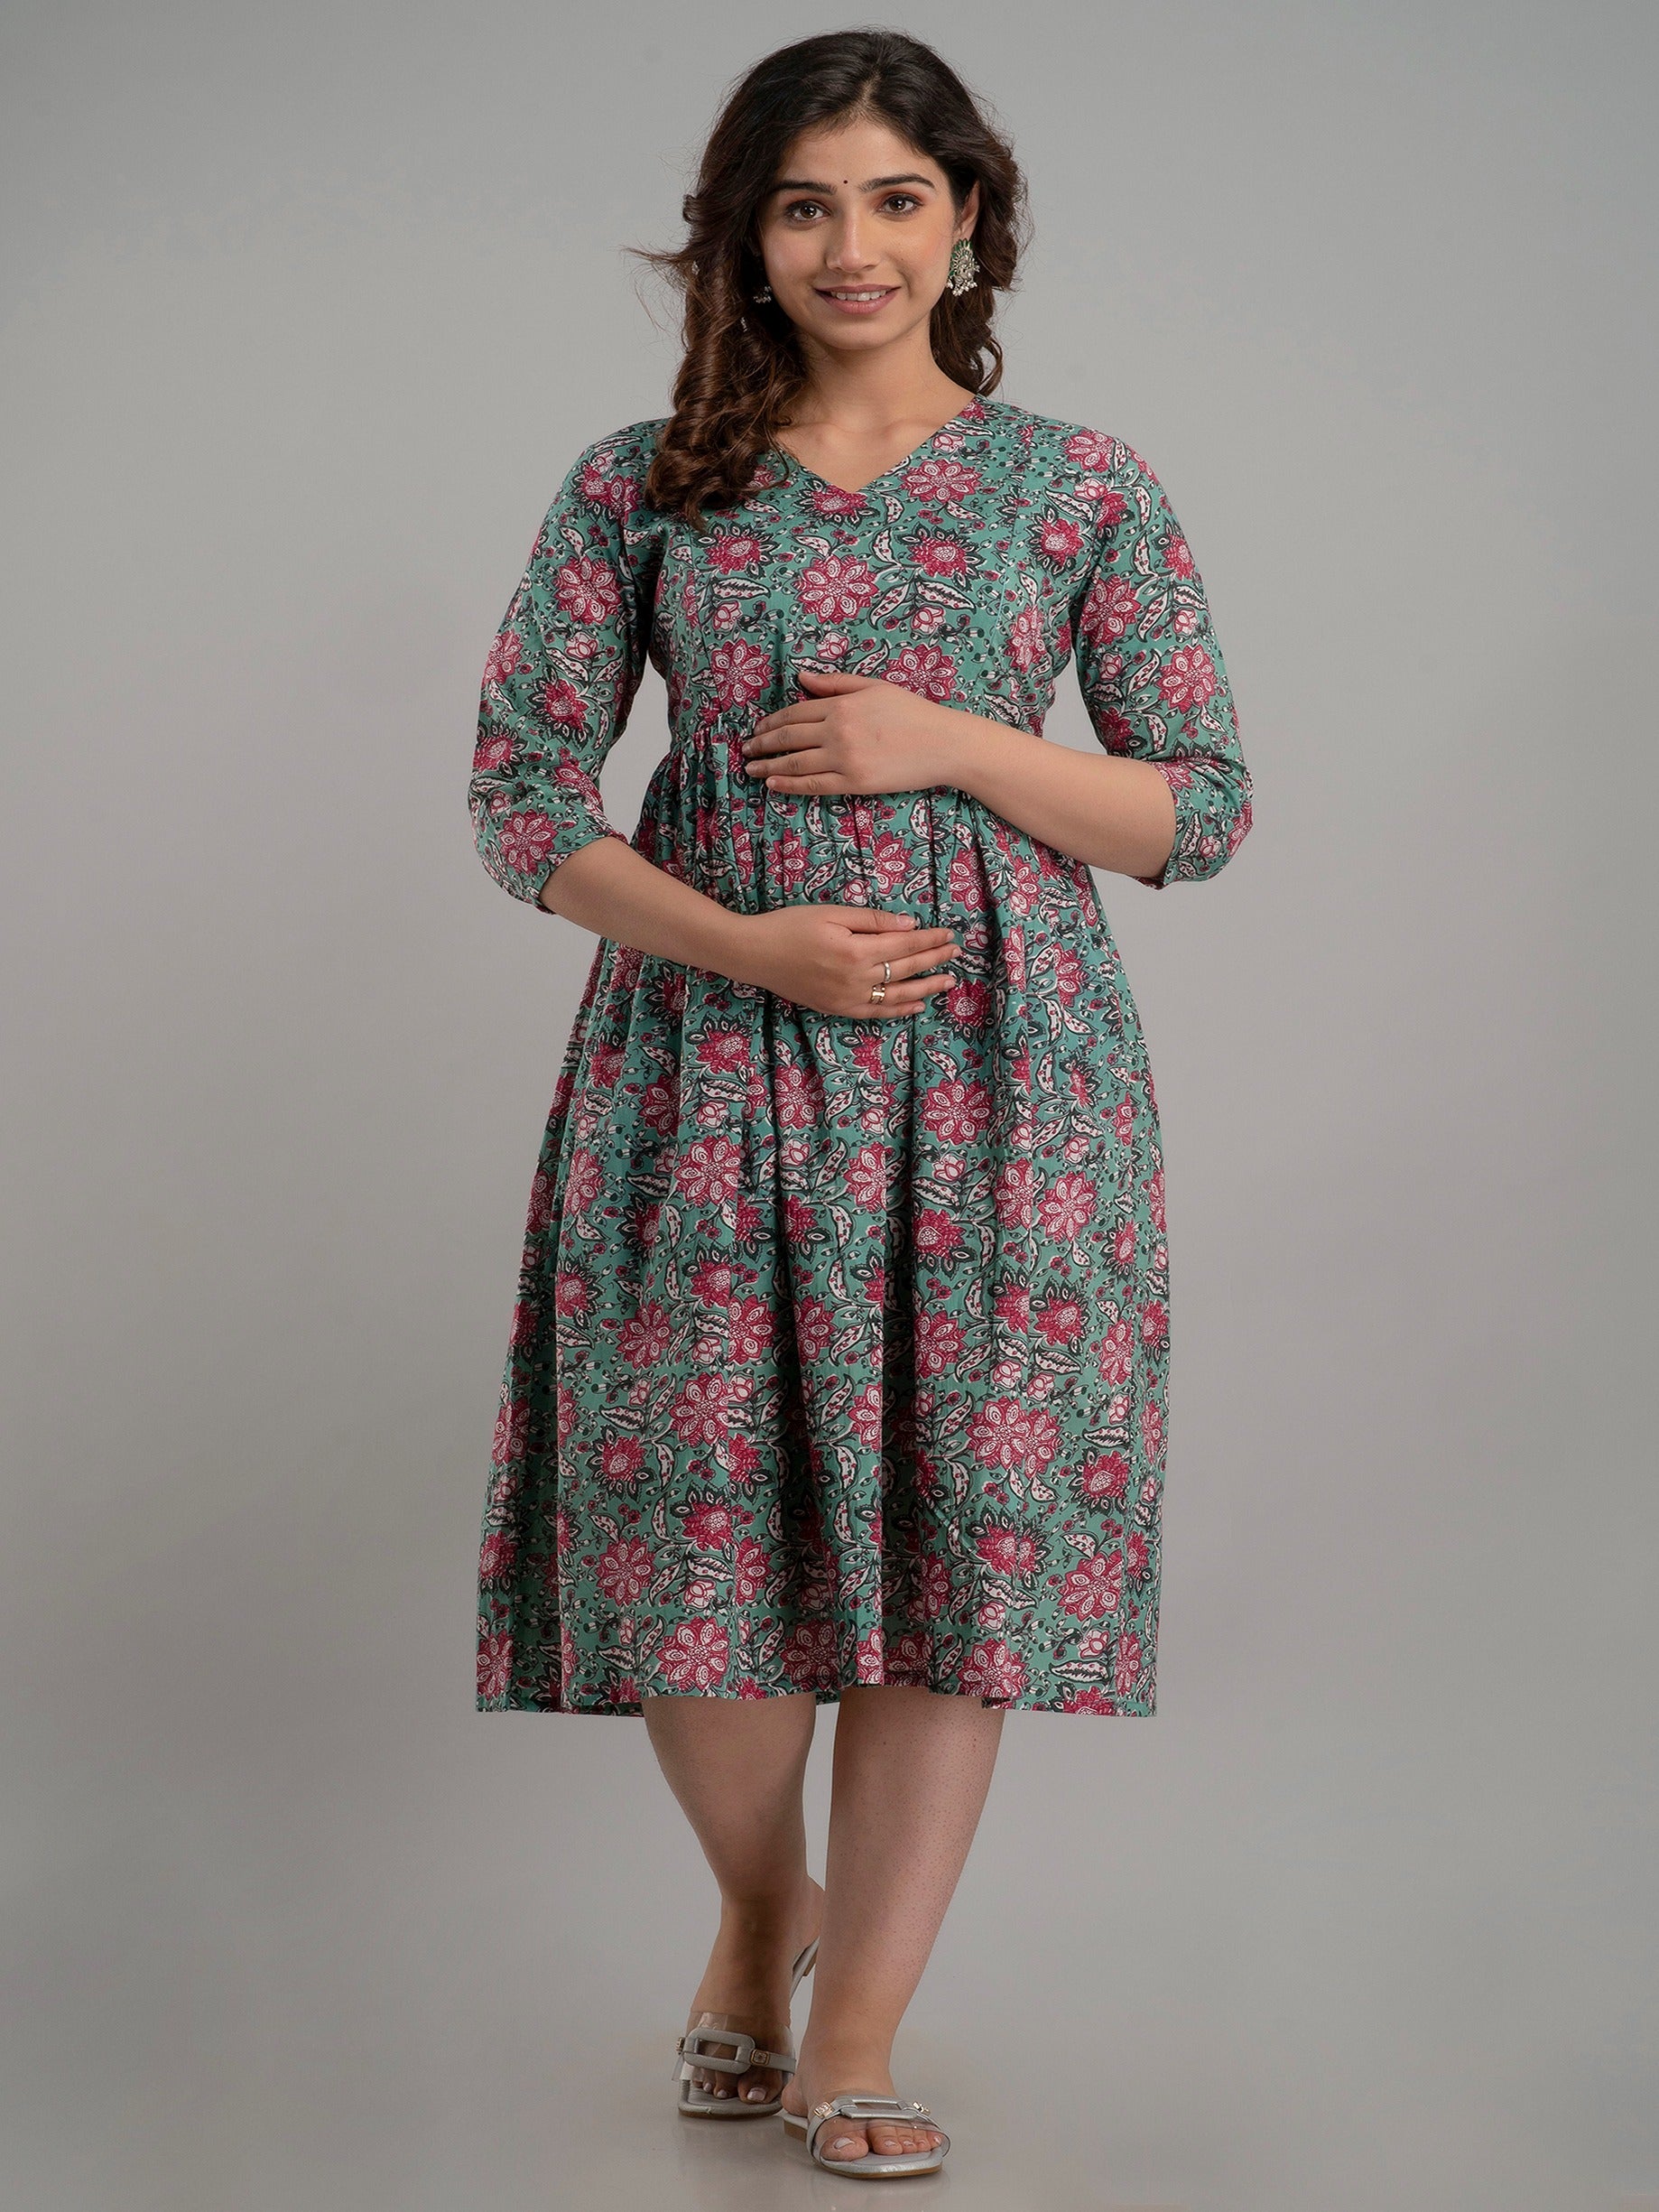 Buy Mom's Kurtiz Maternity wear Feeding Kurtis Anarkali Style Multicolours  at Amazon.in